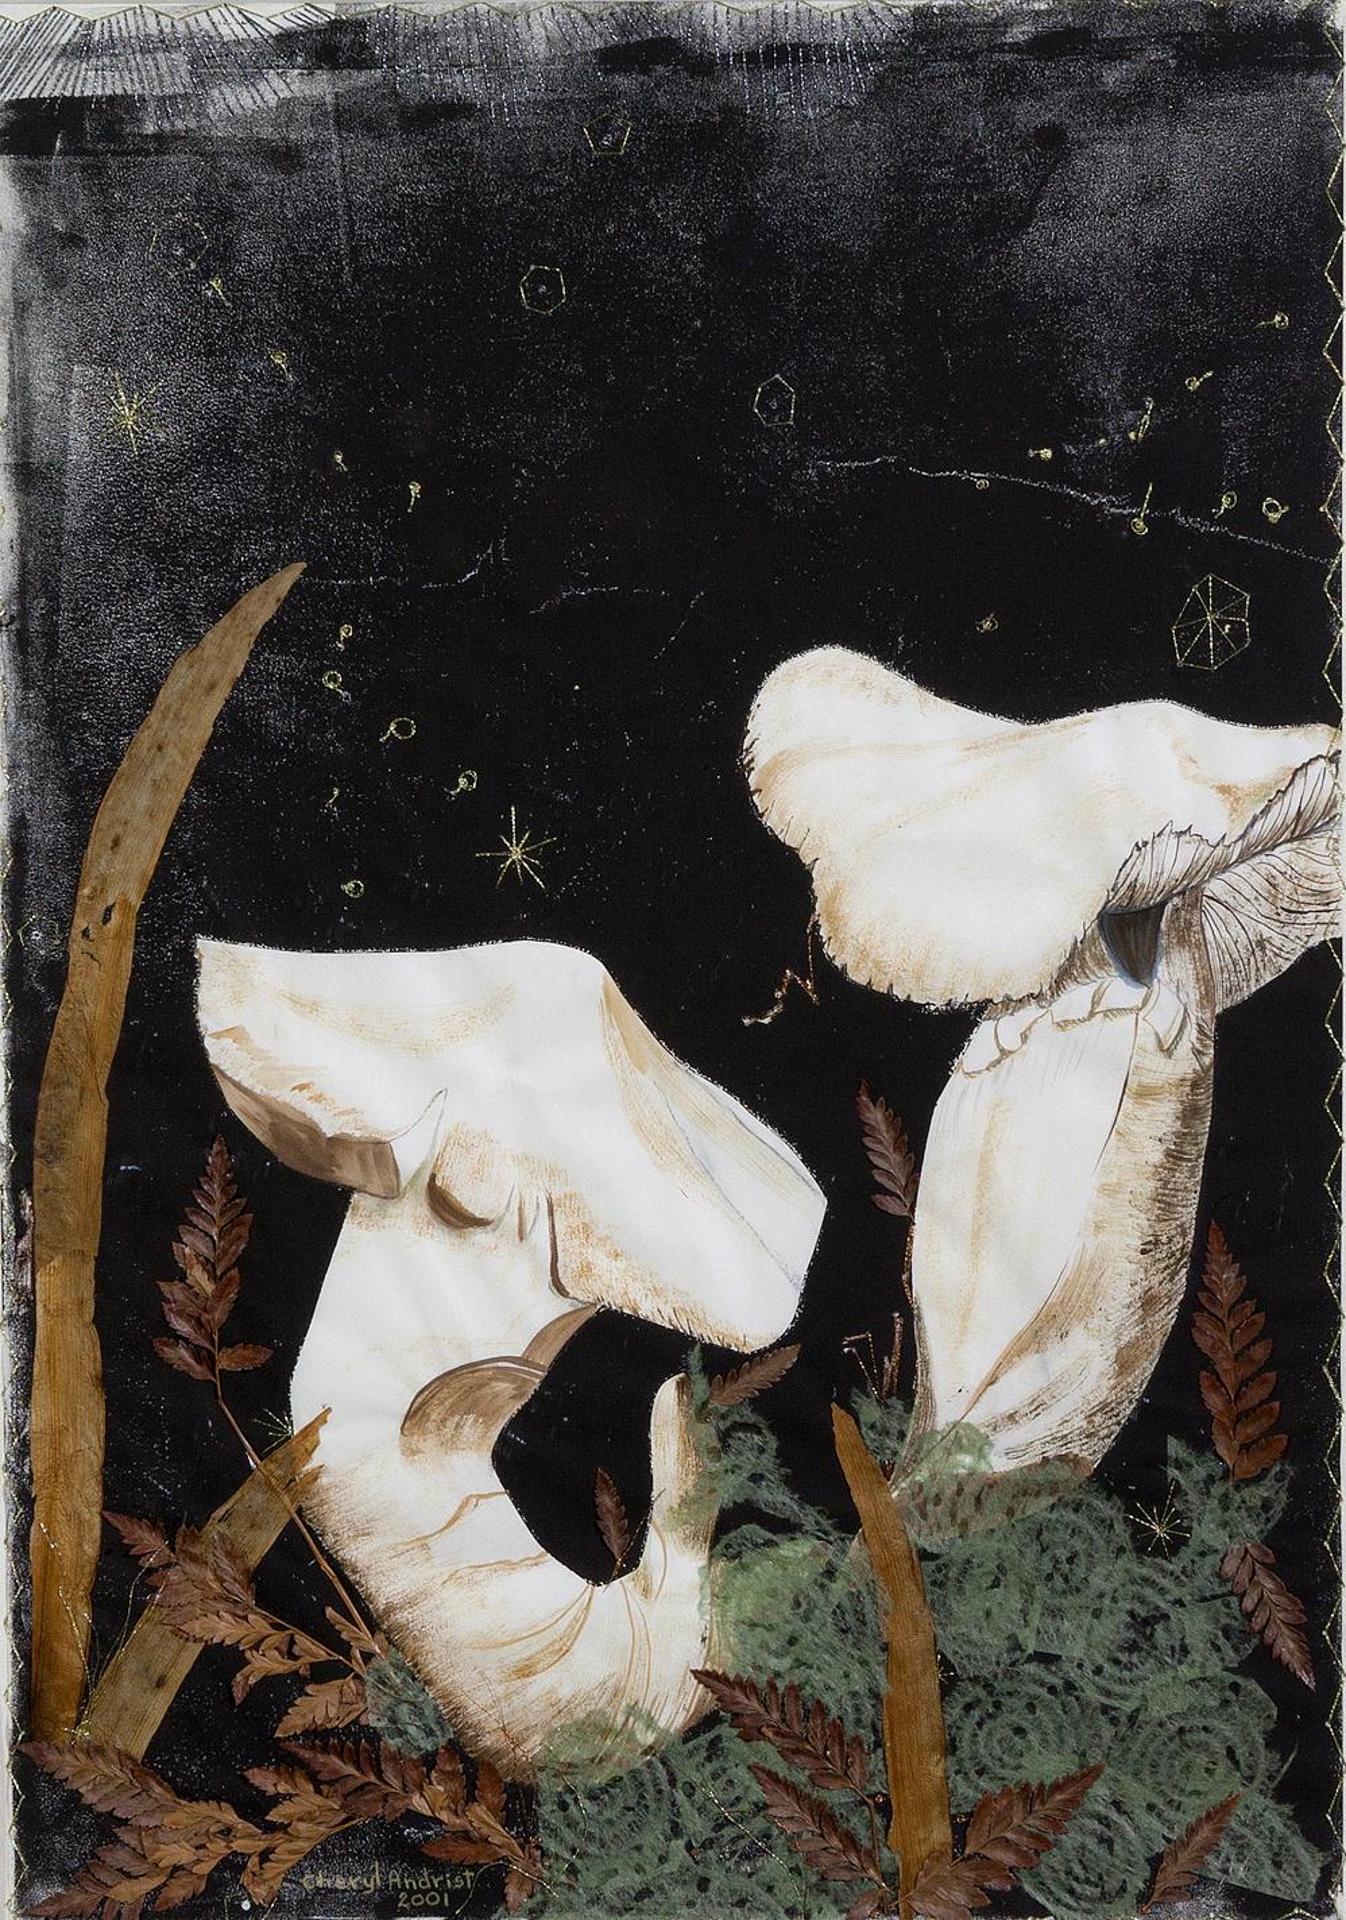 Cheryl Andrist (1945) - Untitled - Mushrooms and Night Sky